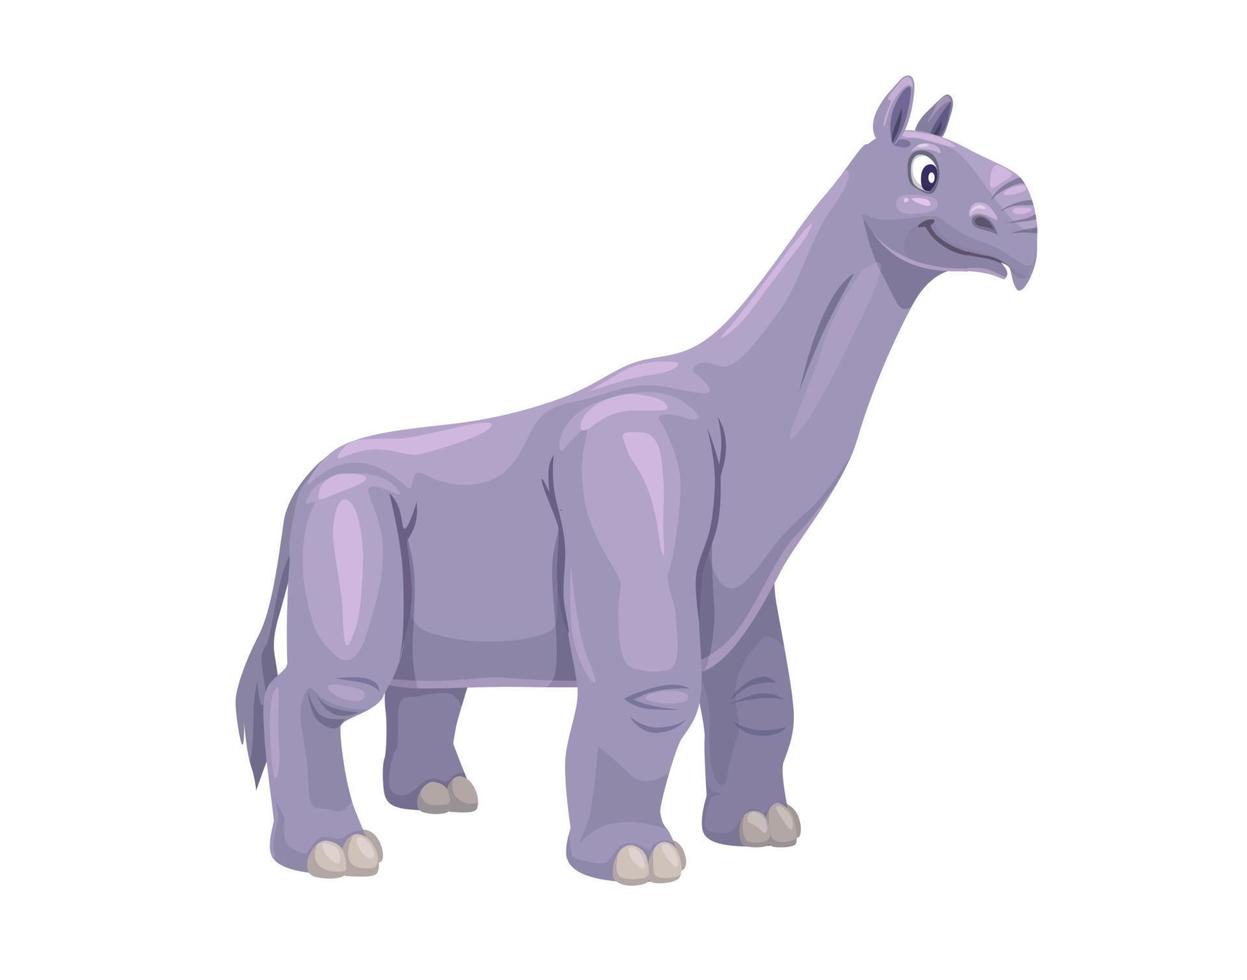 Cartoon indricotherium dinosaur character, vector